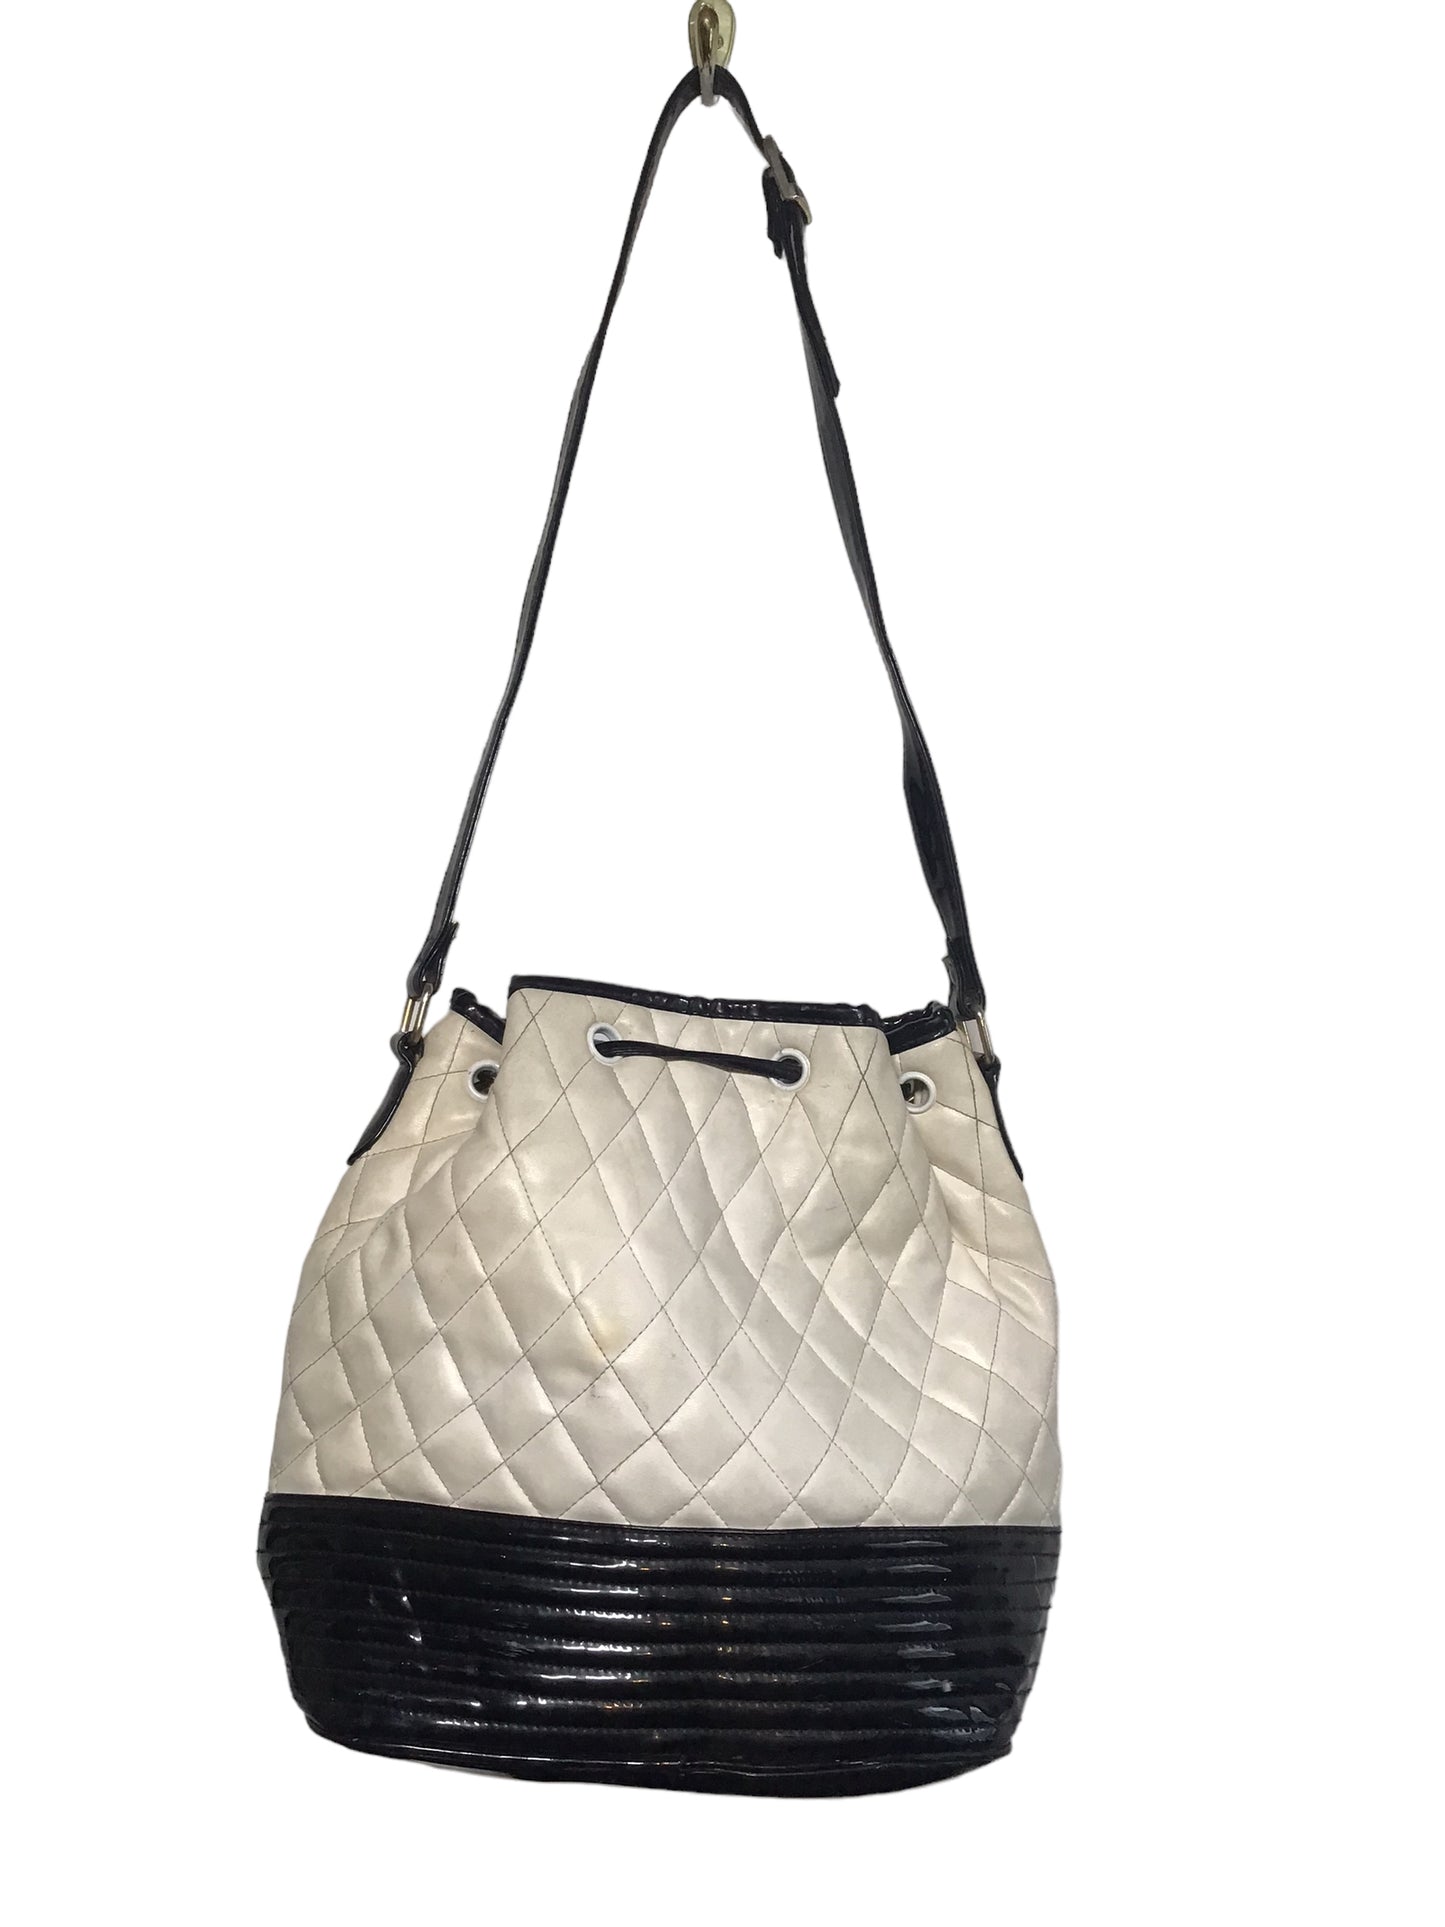 Black and White Shoulder Bag (W36xH20cm)